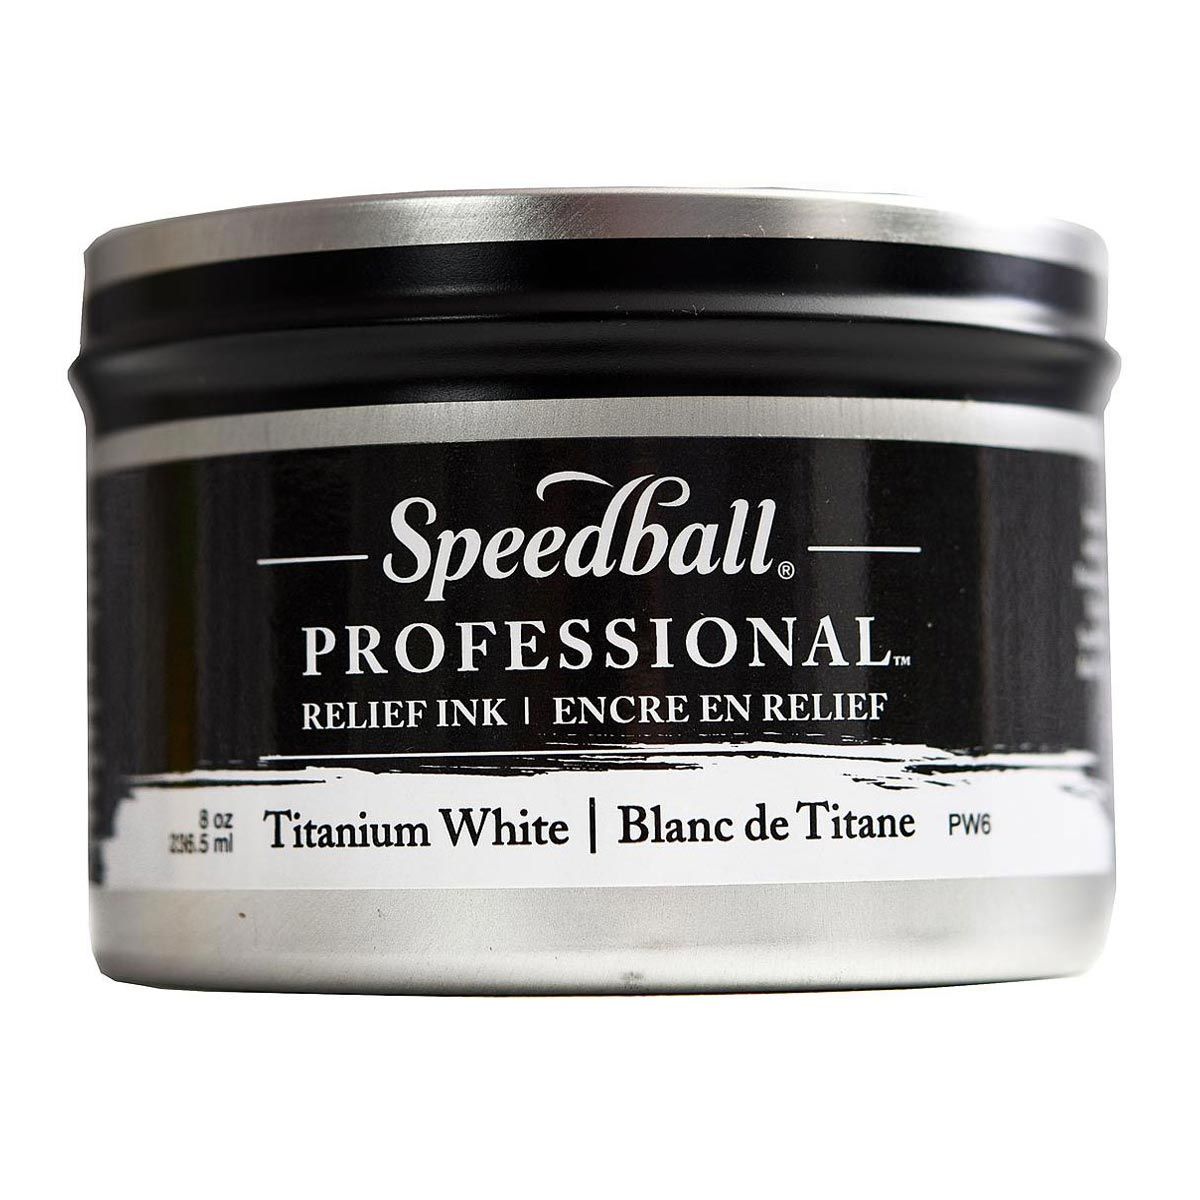 Speedball Professional Relief Ink - Titanium White 8 oz